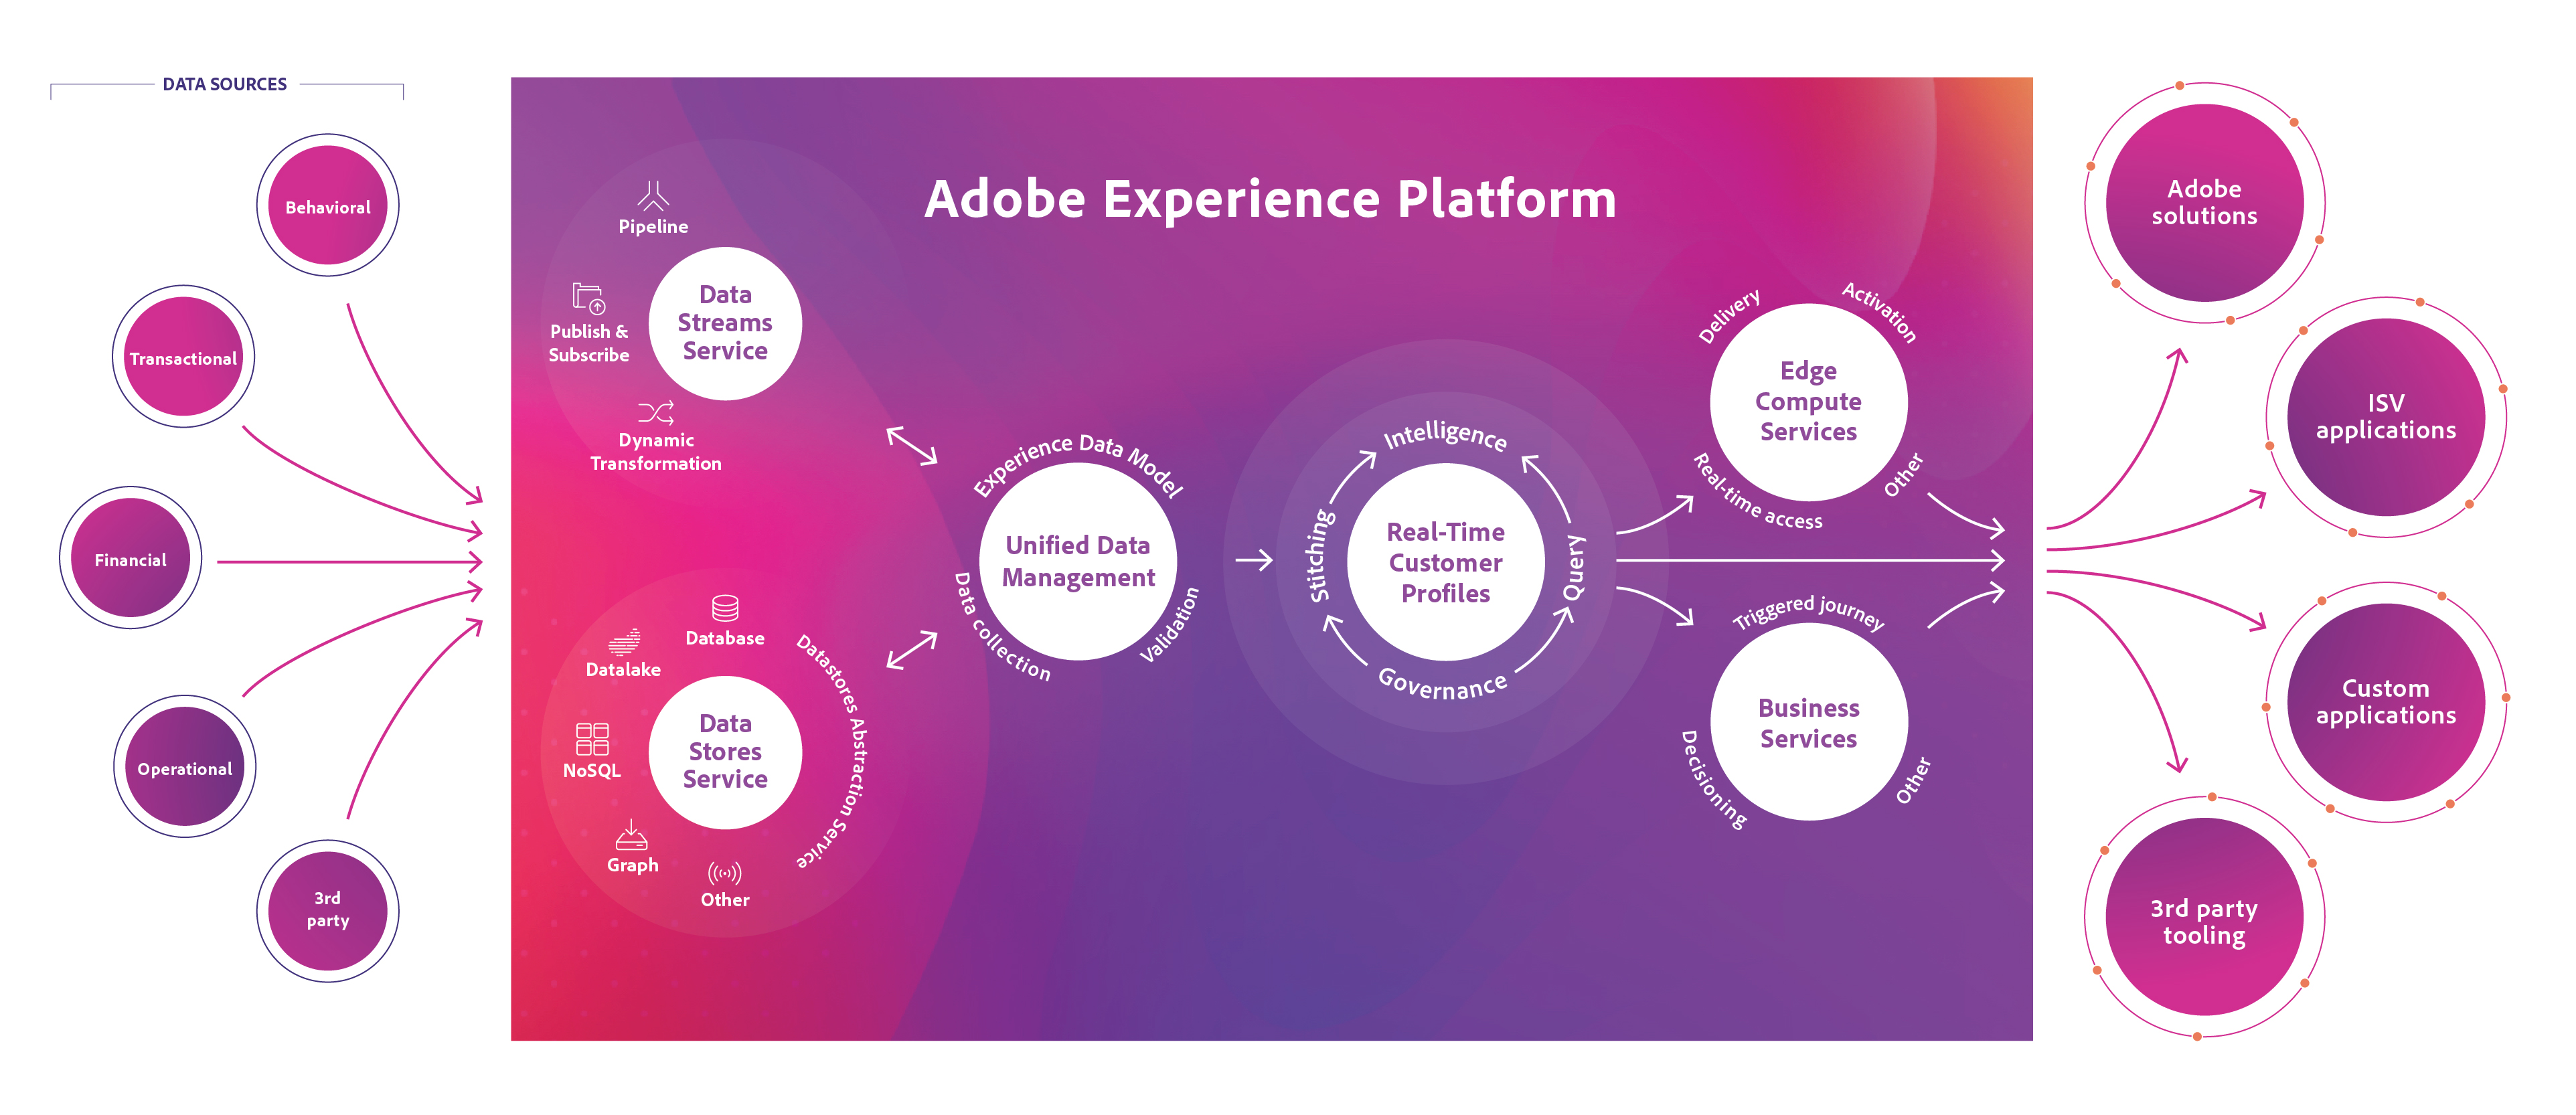 Adobe Experience Platform Overview